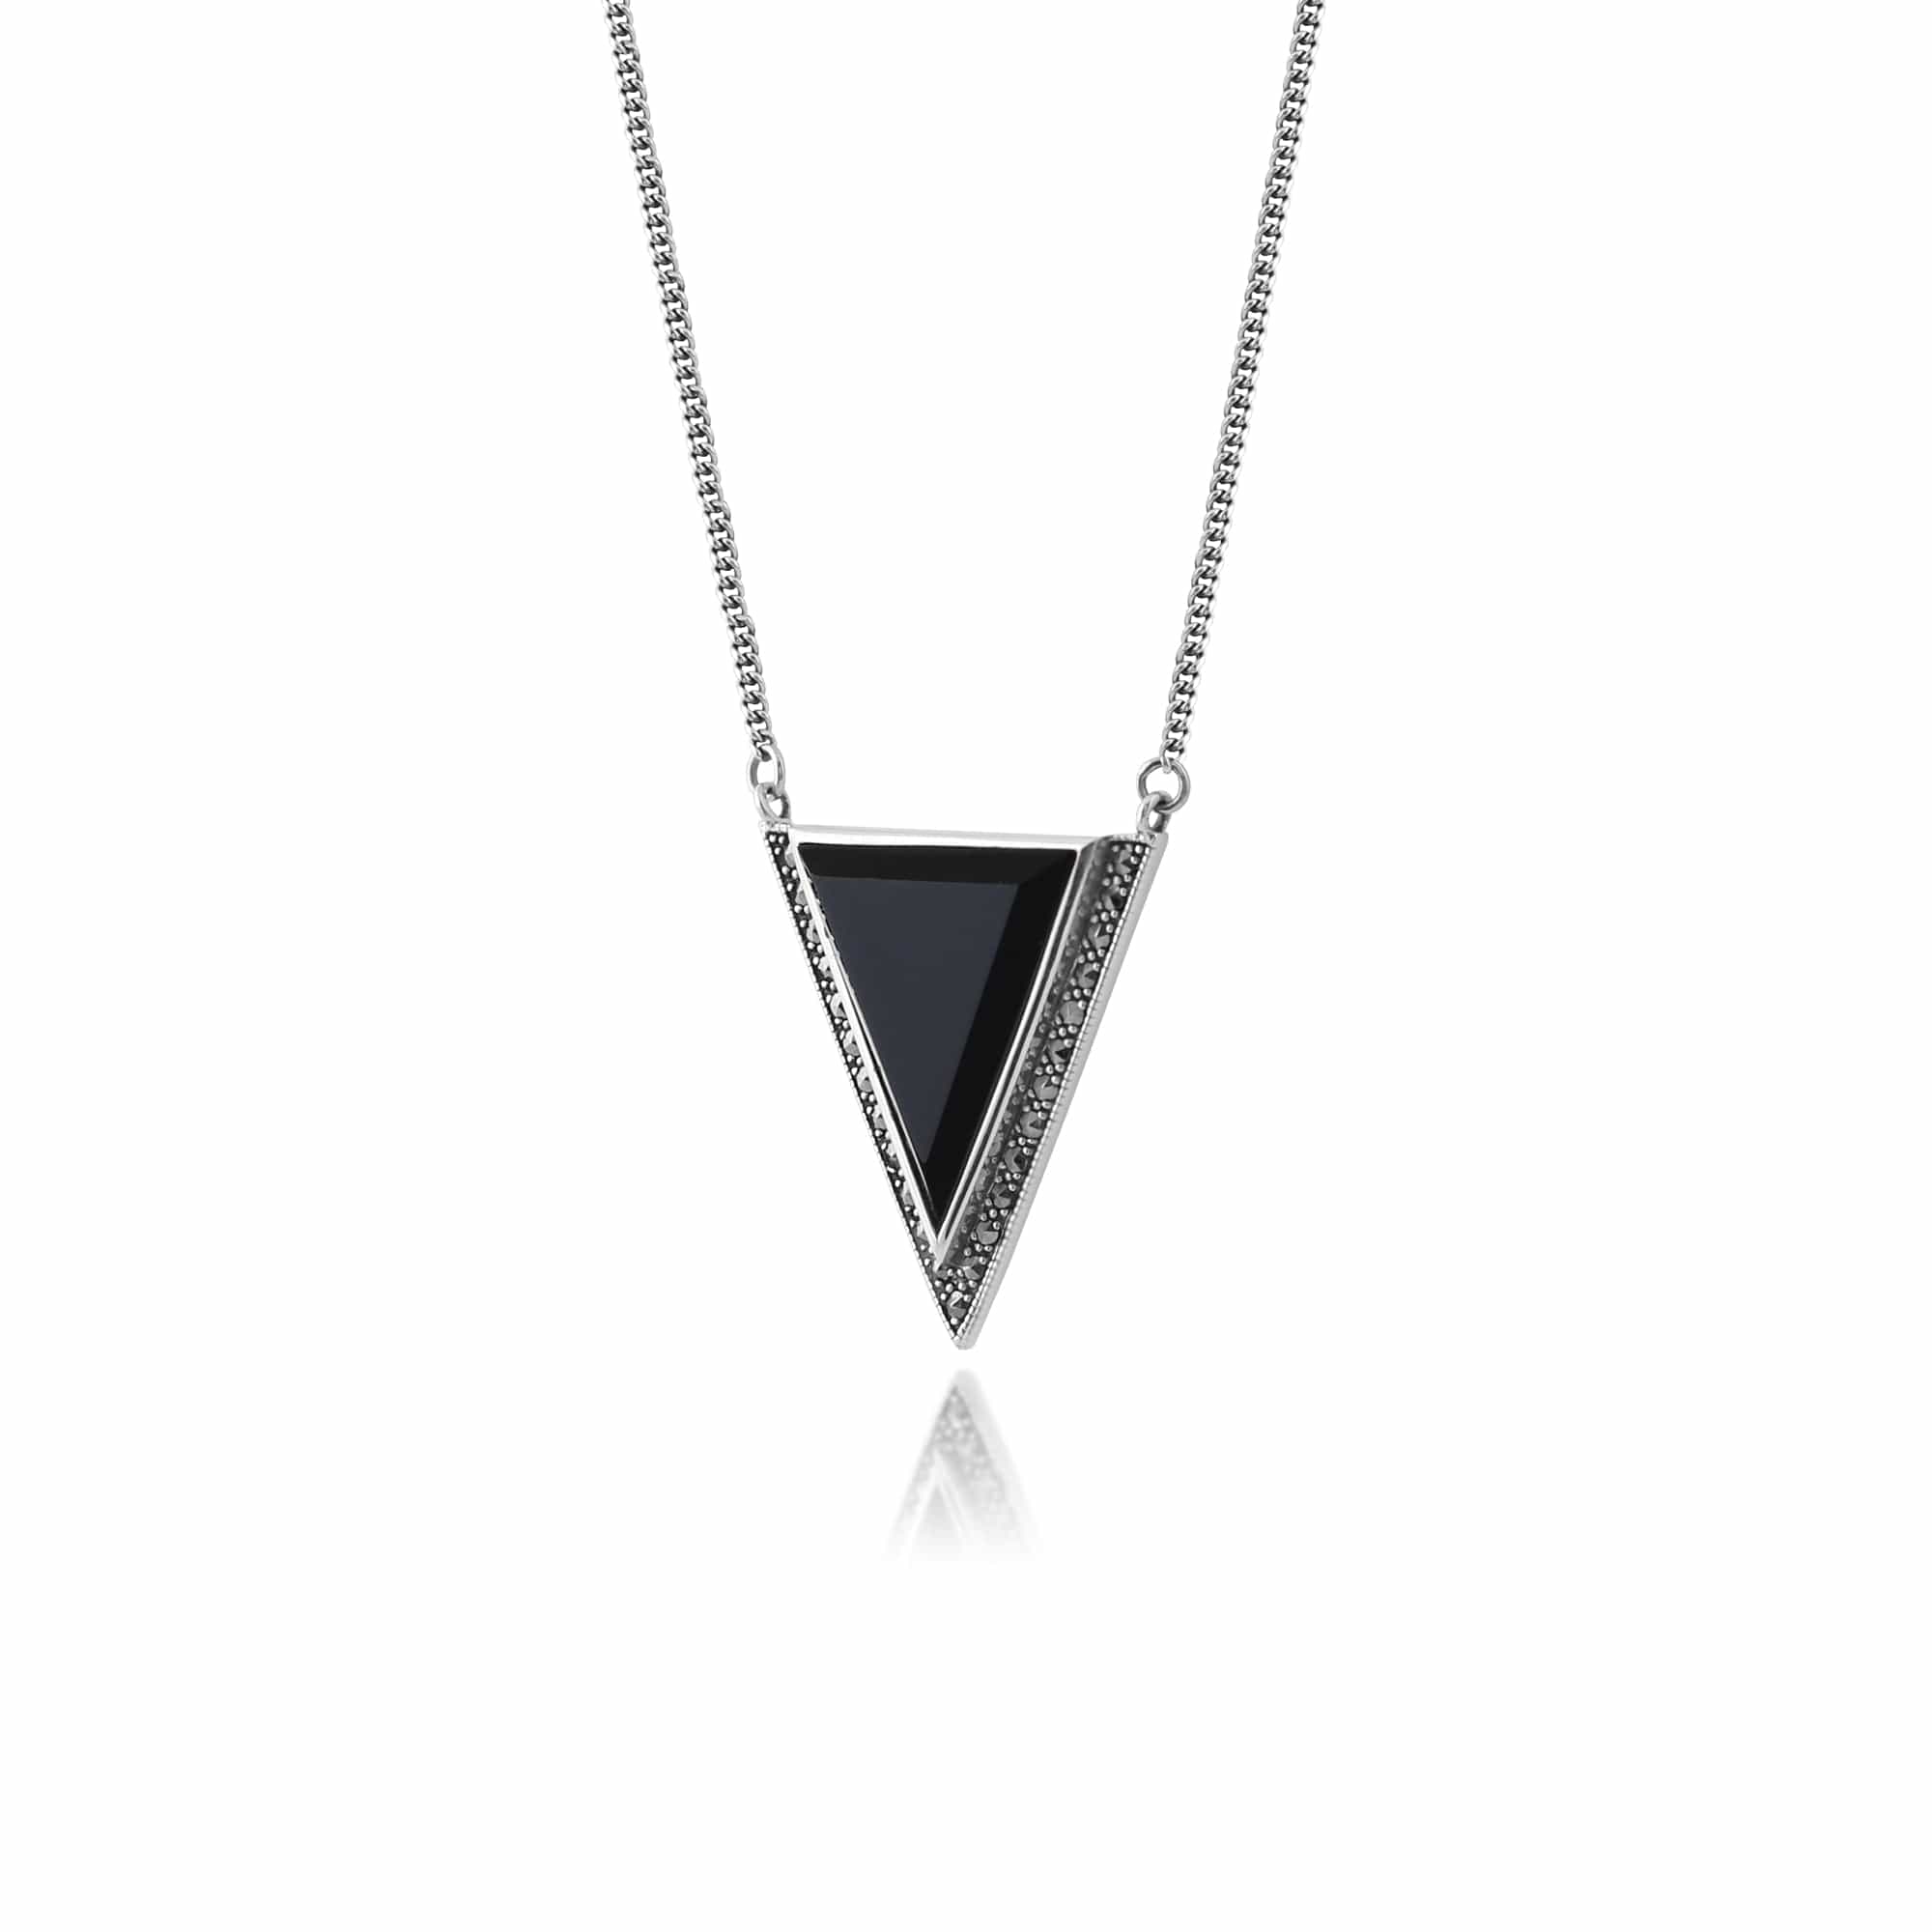 Art Deco Style Triangle Black Onyx & Marcasite Necklace in 925 Sterling Silver - Gemondo